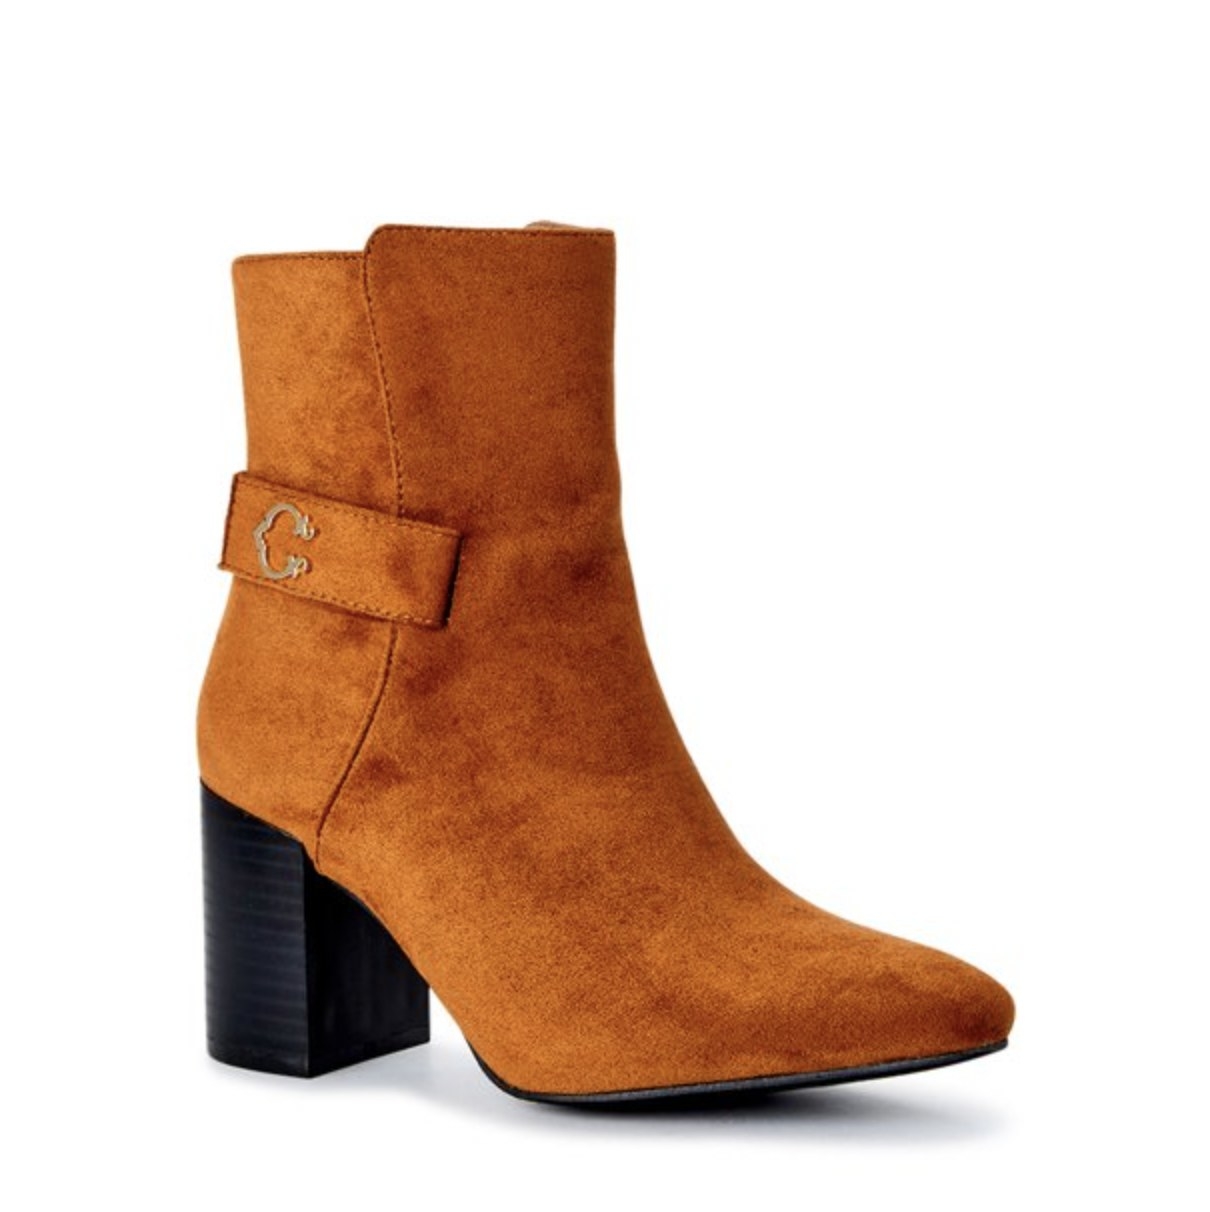 An orange heeled boot